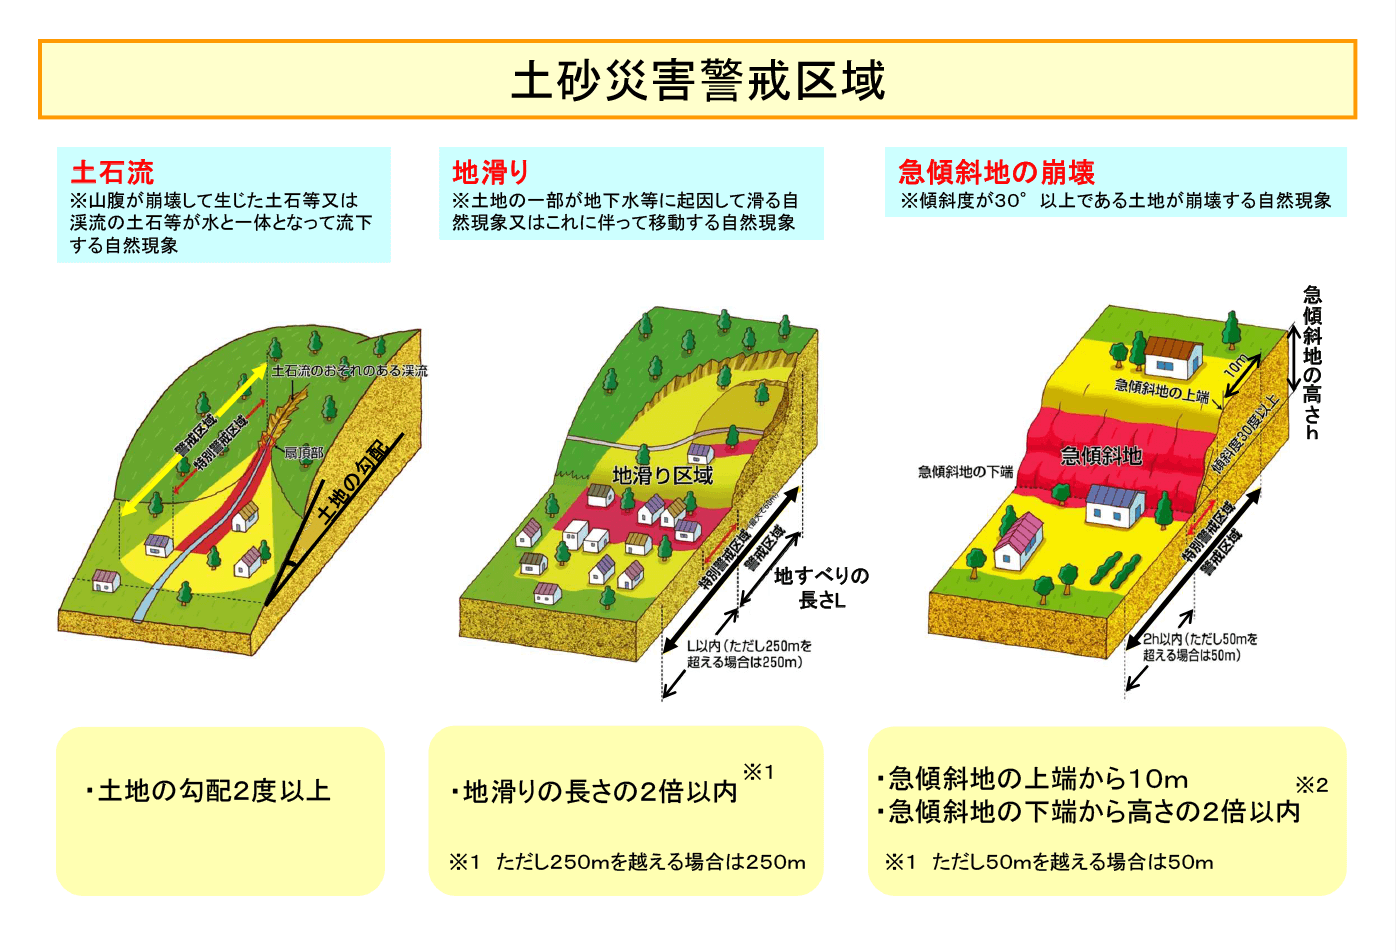 FY2009 Katashina Village (No.1) Investigative work for the determination of landslide disaster hazard
level (2010) (Tokyo)